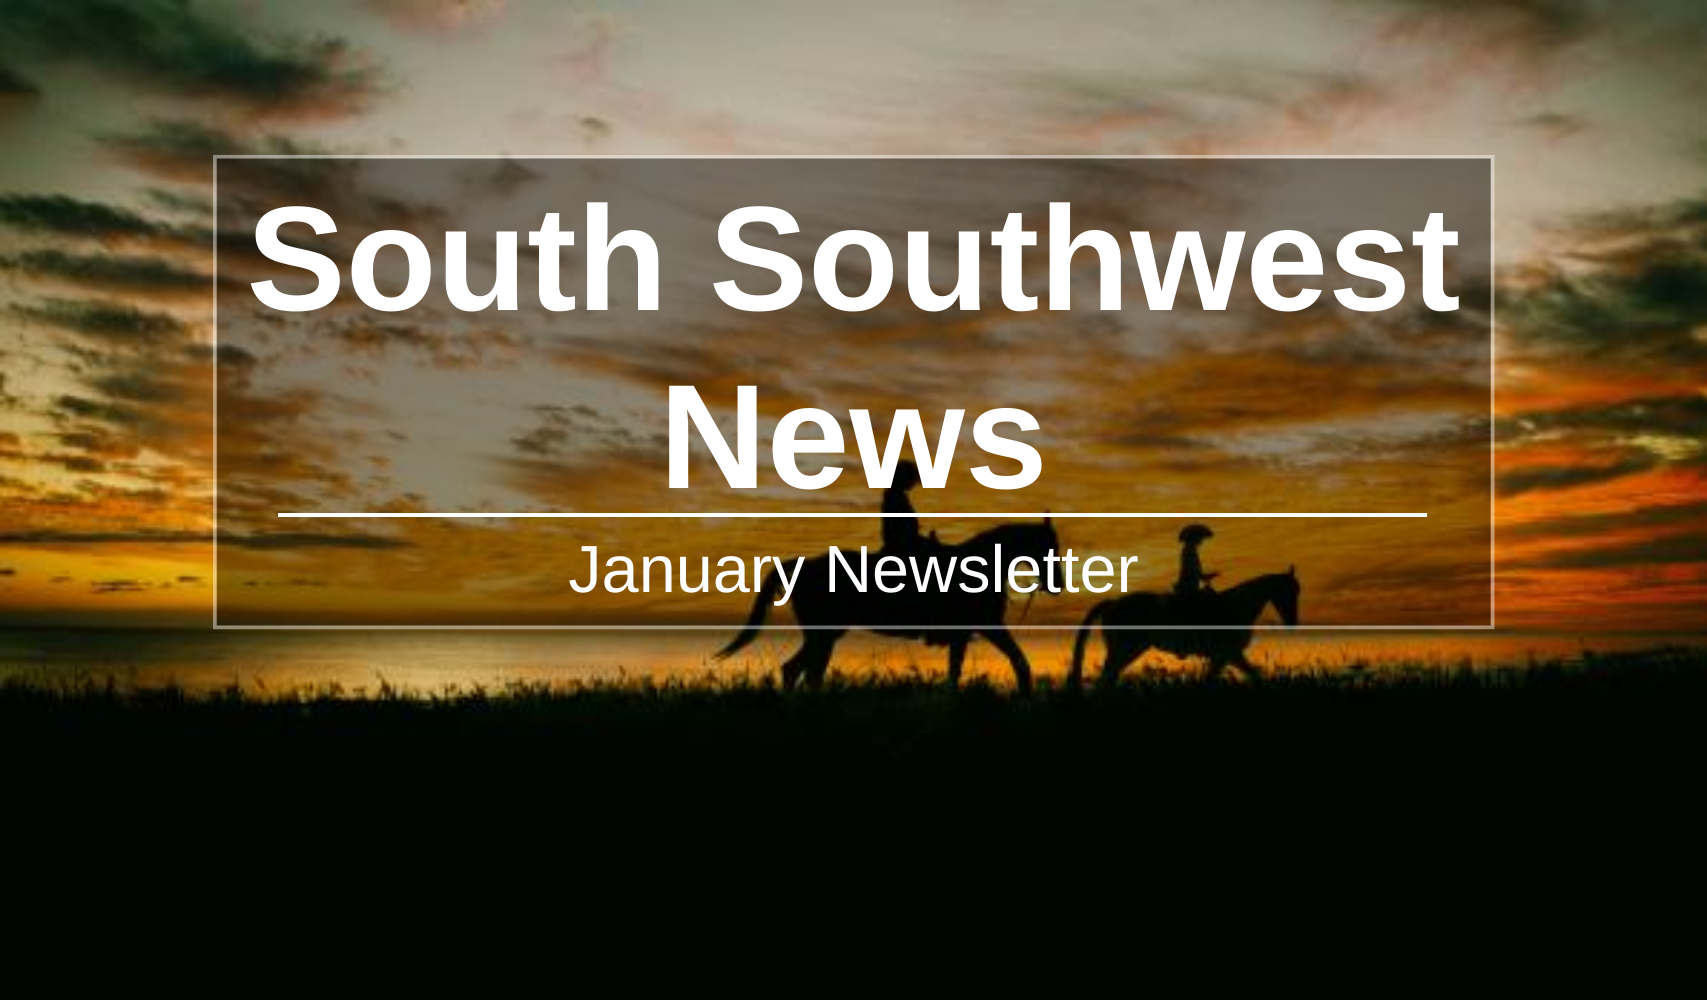 South Southwest News January Newsletter